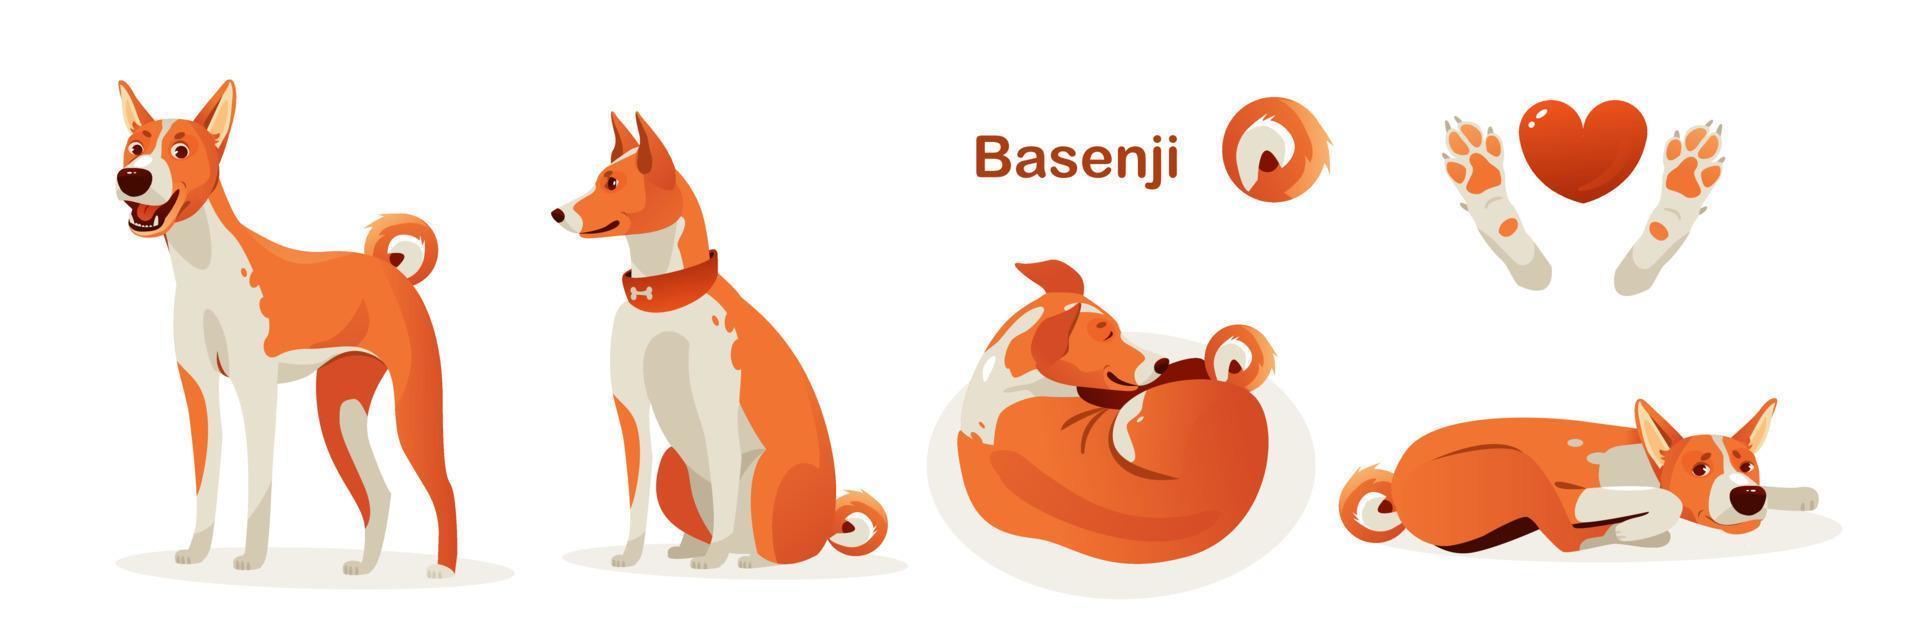 Basenji-Hund posiert. Cartoon-Vektor-Illustration vektor